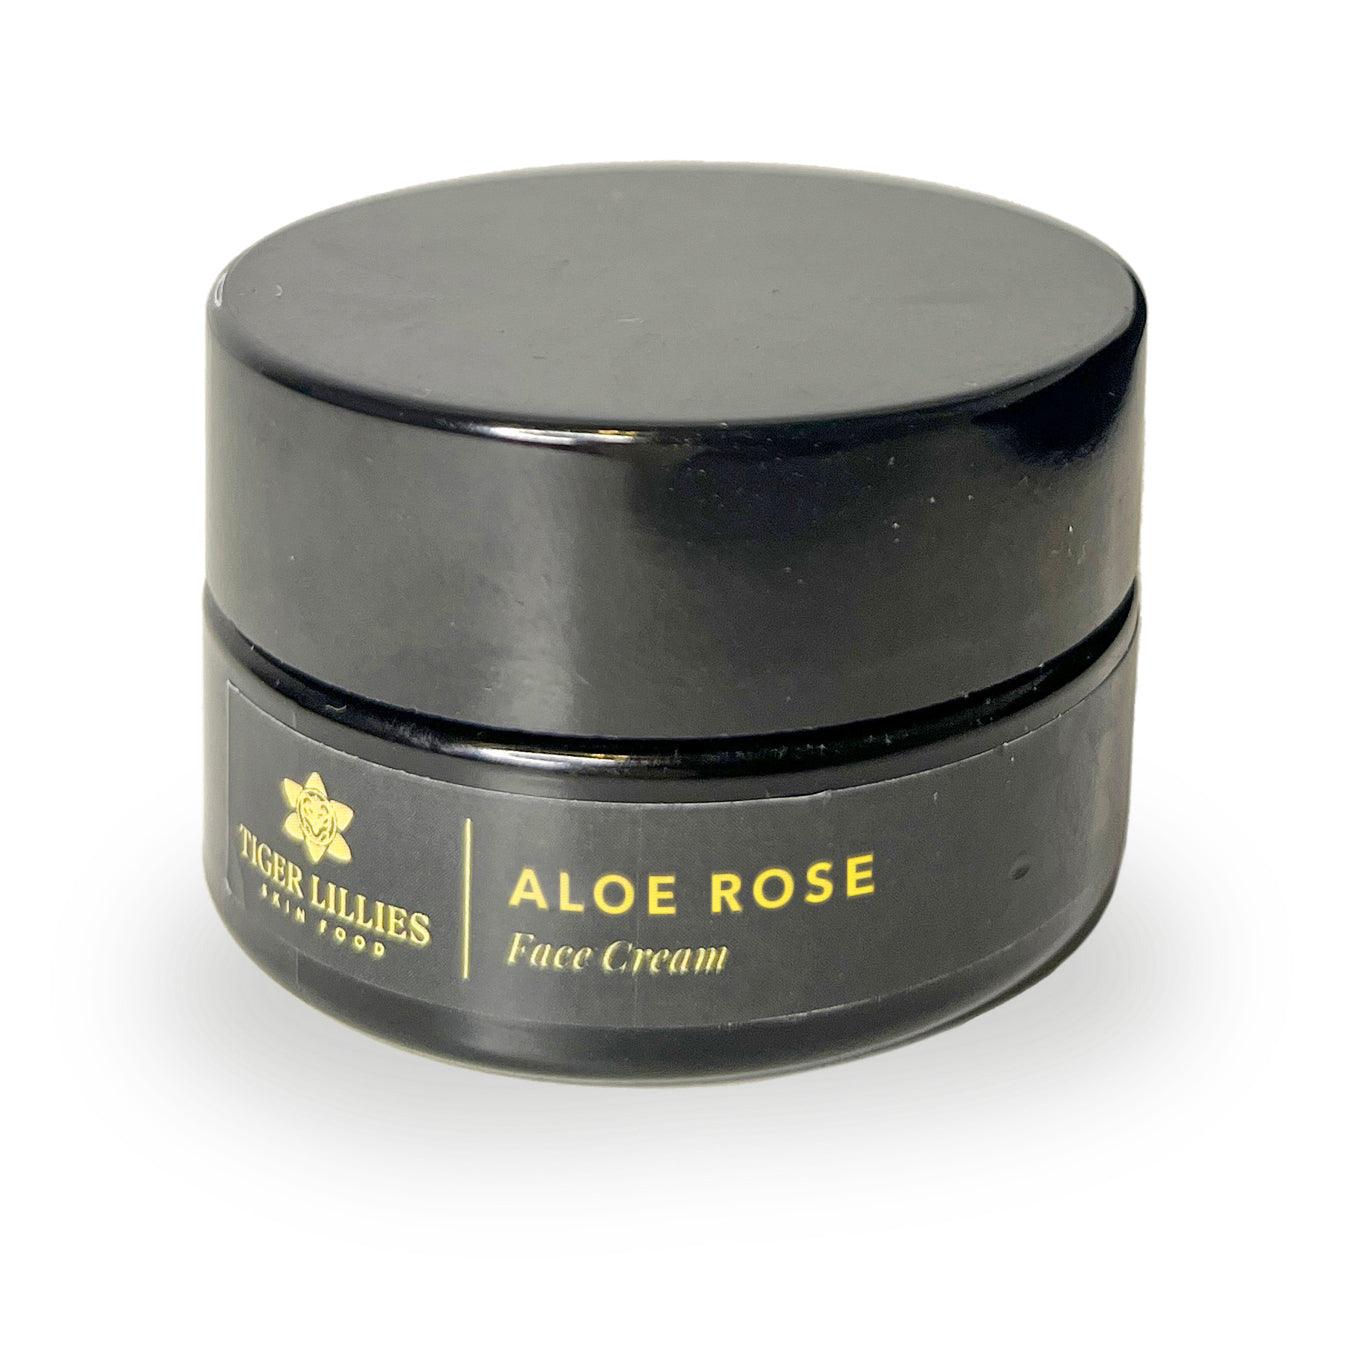 Aloe Rose face cream - Tiger Lillies Skin Food